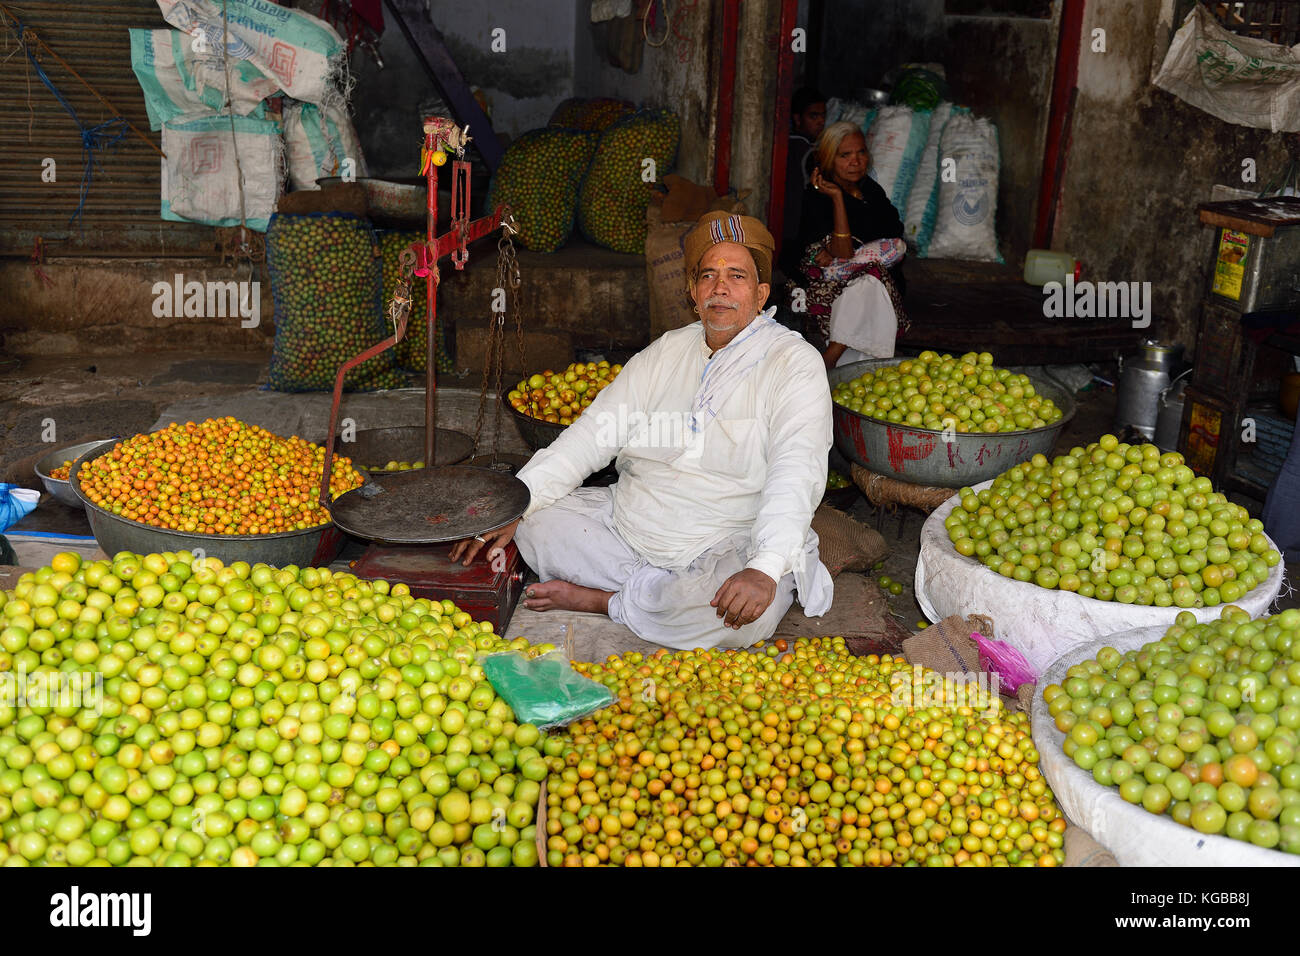 Ahmedabad, Gujarat, Inde - 30 janvier 2015 : vente de légumes de charrettes dans la rue dans la ville ahmedad dans l'état du Gujarat en Inde Banque D'Images